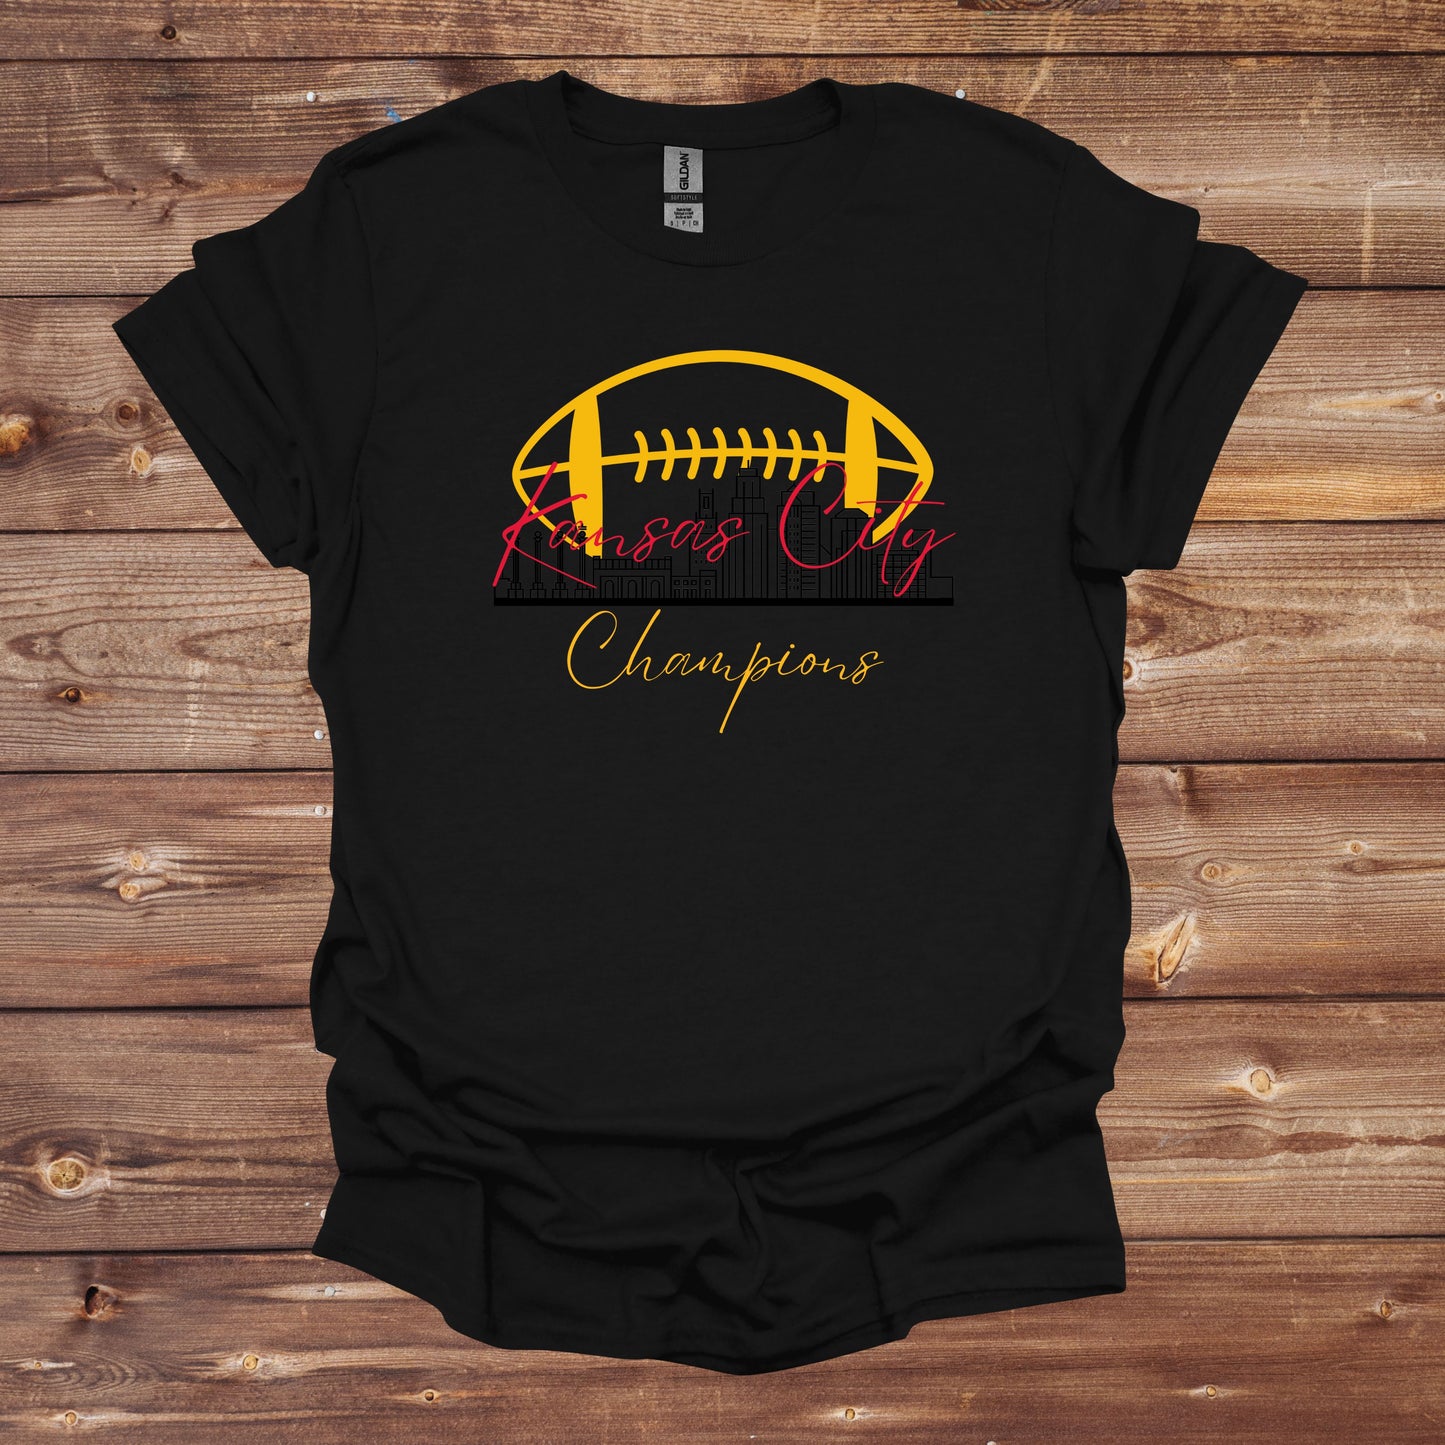 Football T-Shirt - Kansas City Chiefs - Champions - Adult Tee Shirts - Chiefs - Sports